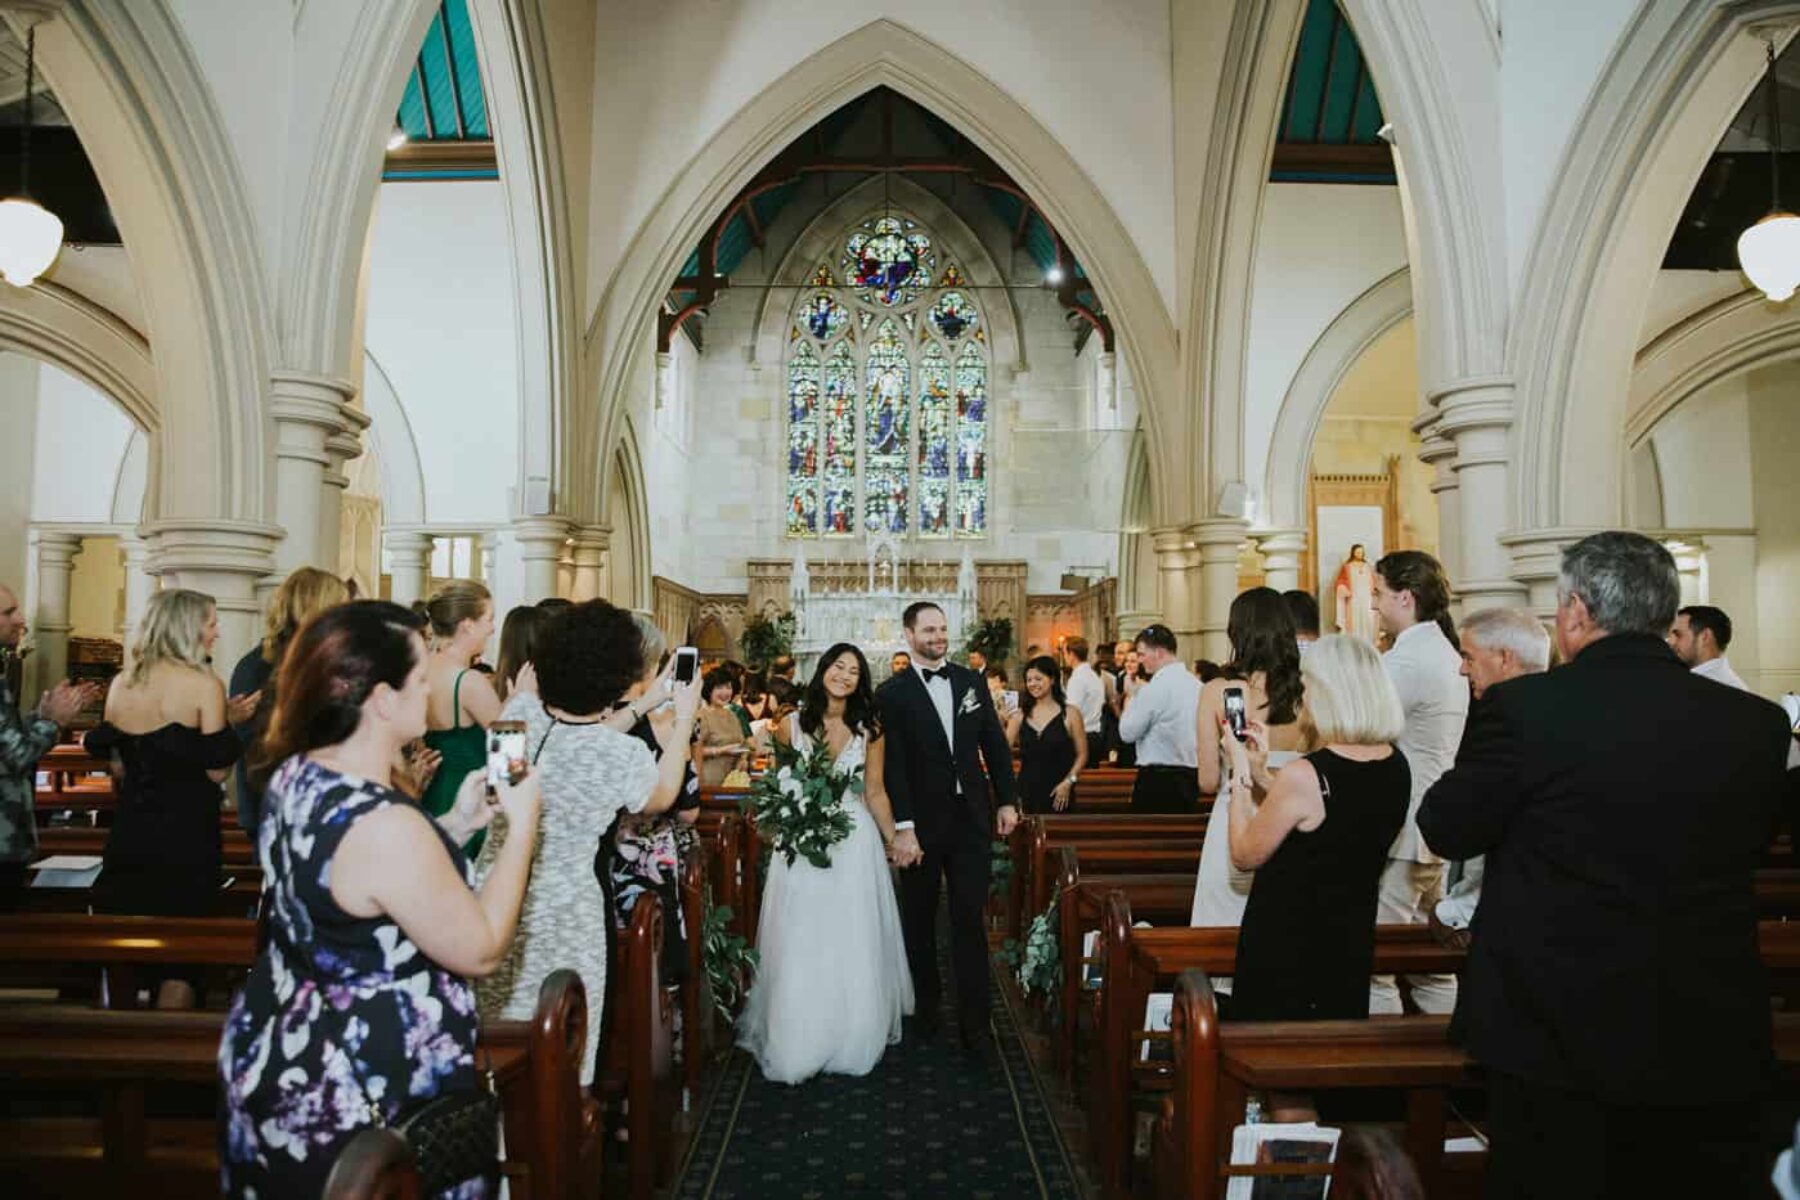 Sydney church wedding at Our Lady of the Sacred Heart, Randwick